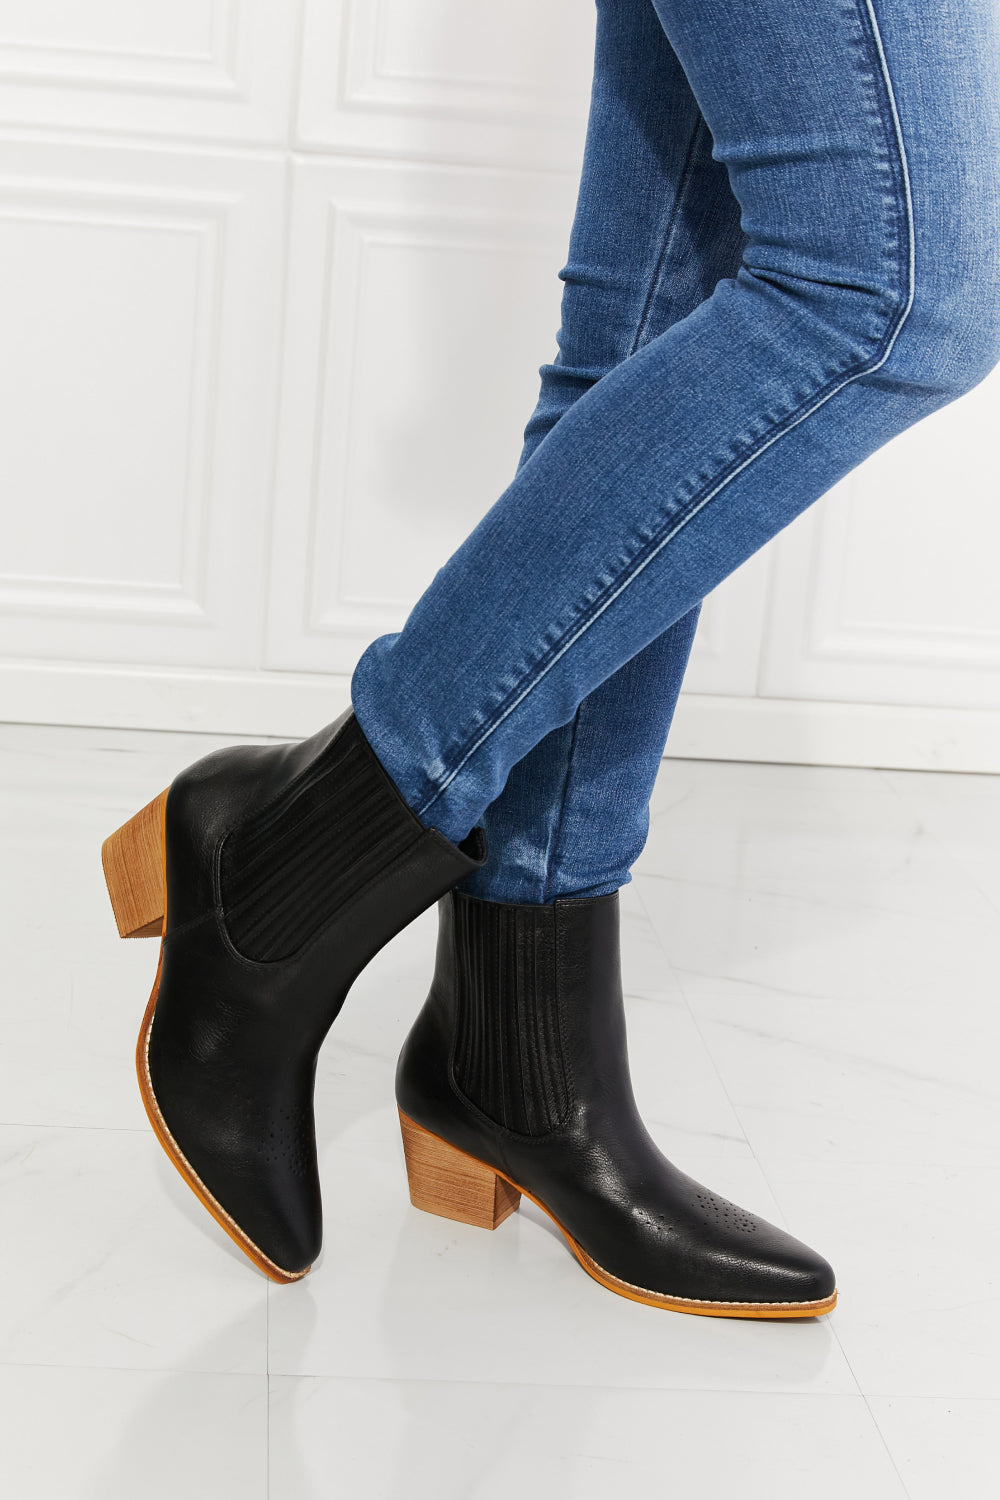 Love the Journey - Stacked Heel Chelsea Boot in Black